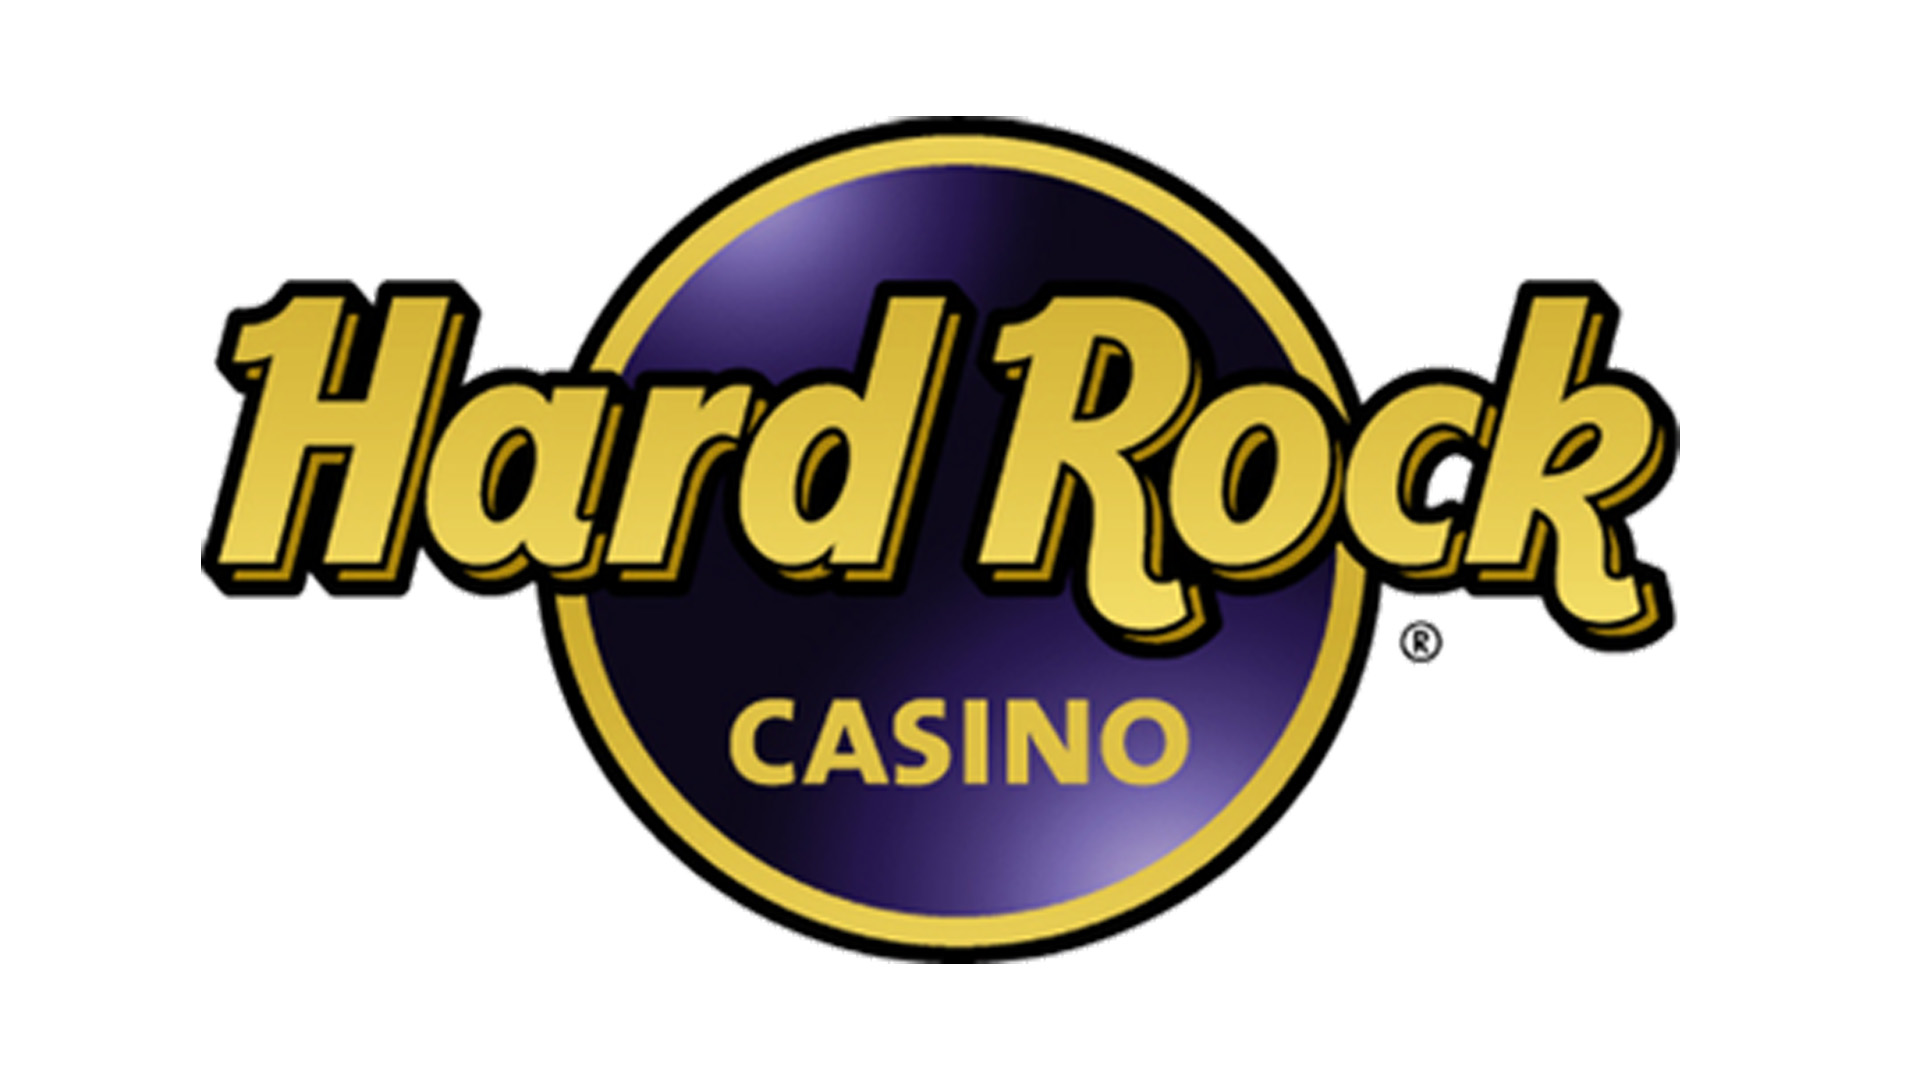 Hard Rock Online Casino instaling